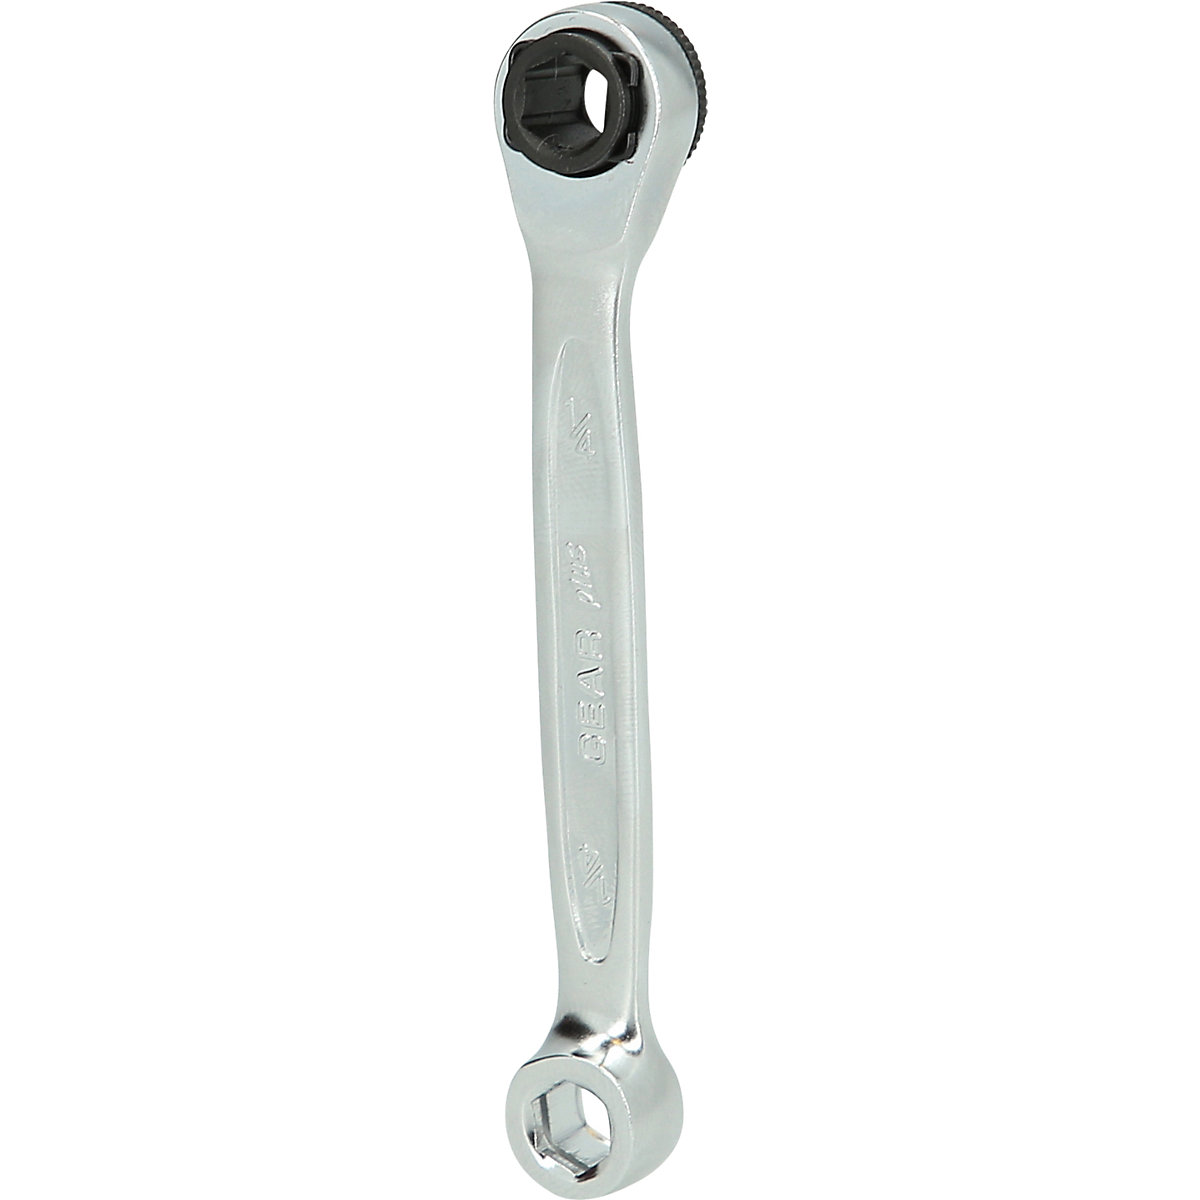 GEARplus mini bit reversible ratchet ring spanner - KS Tools